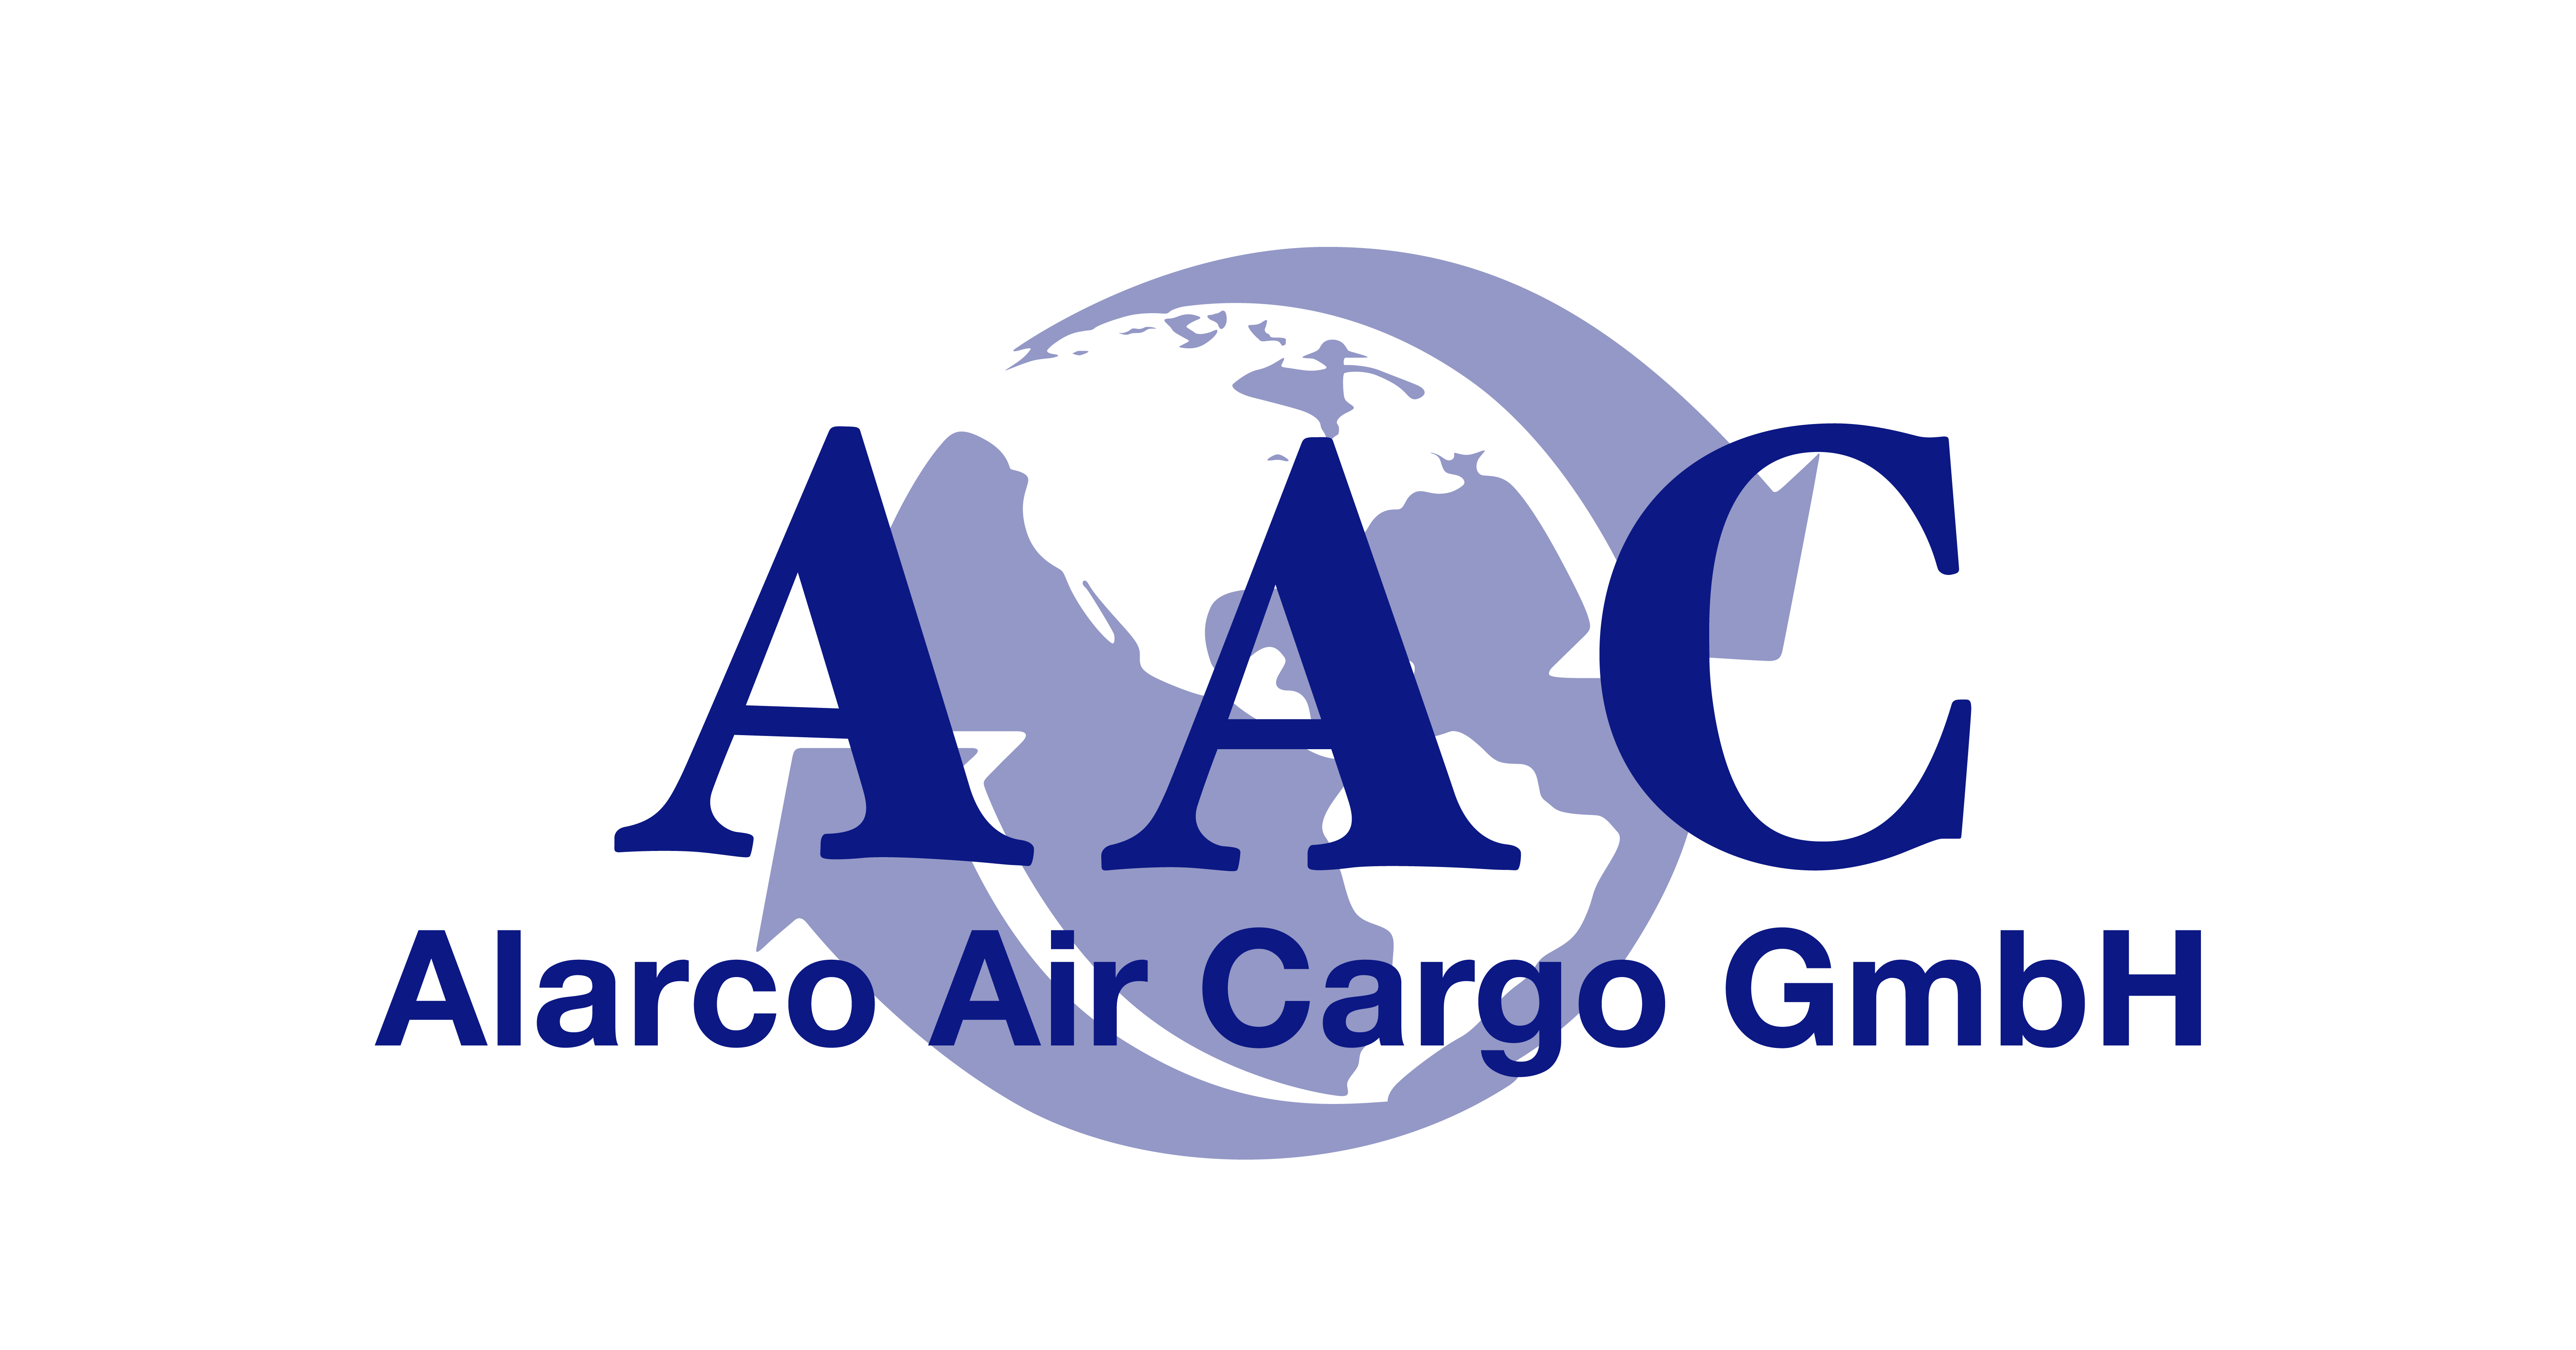 Alarco Air Cargo GmbH